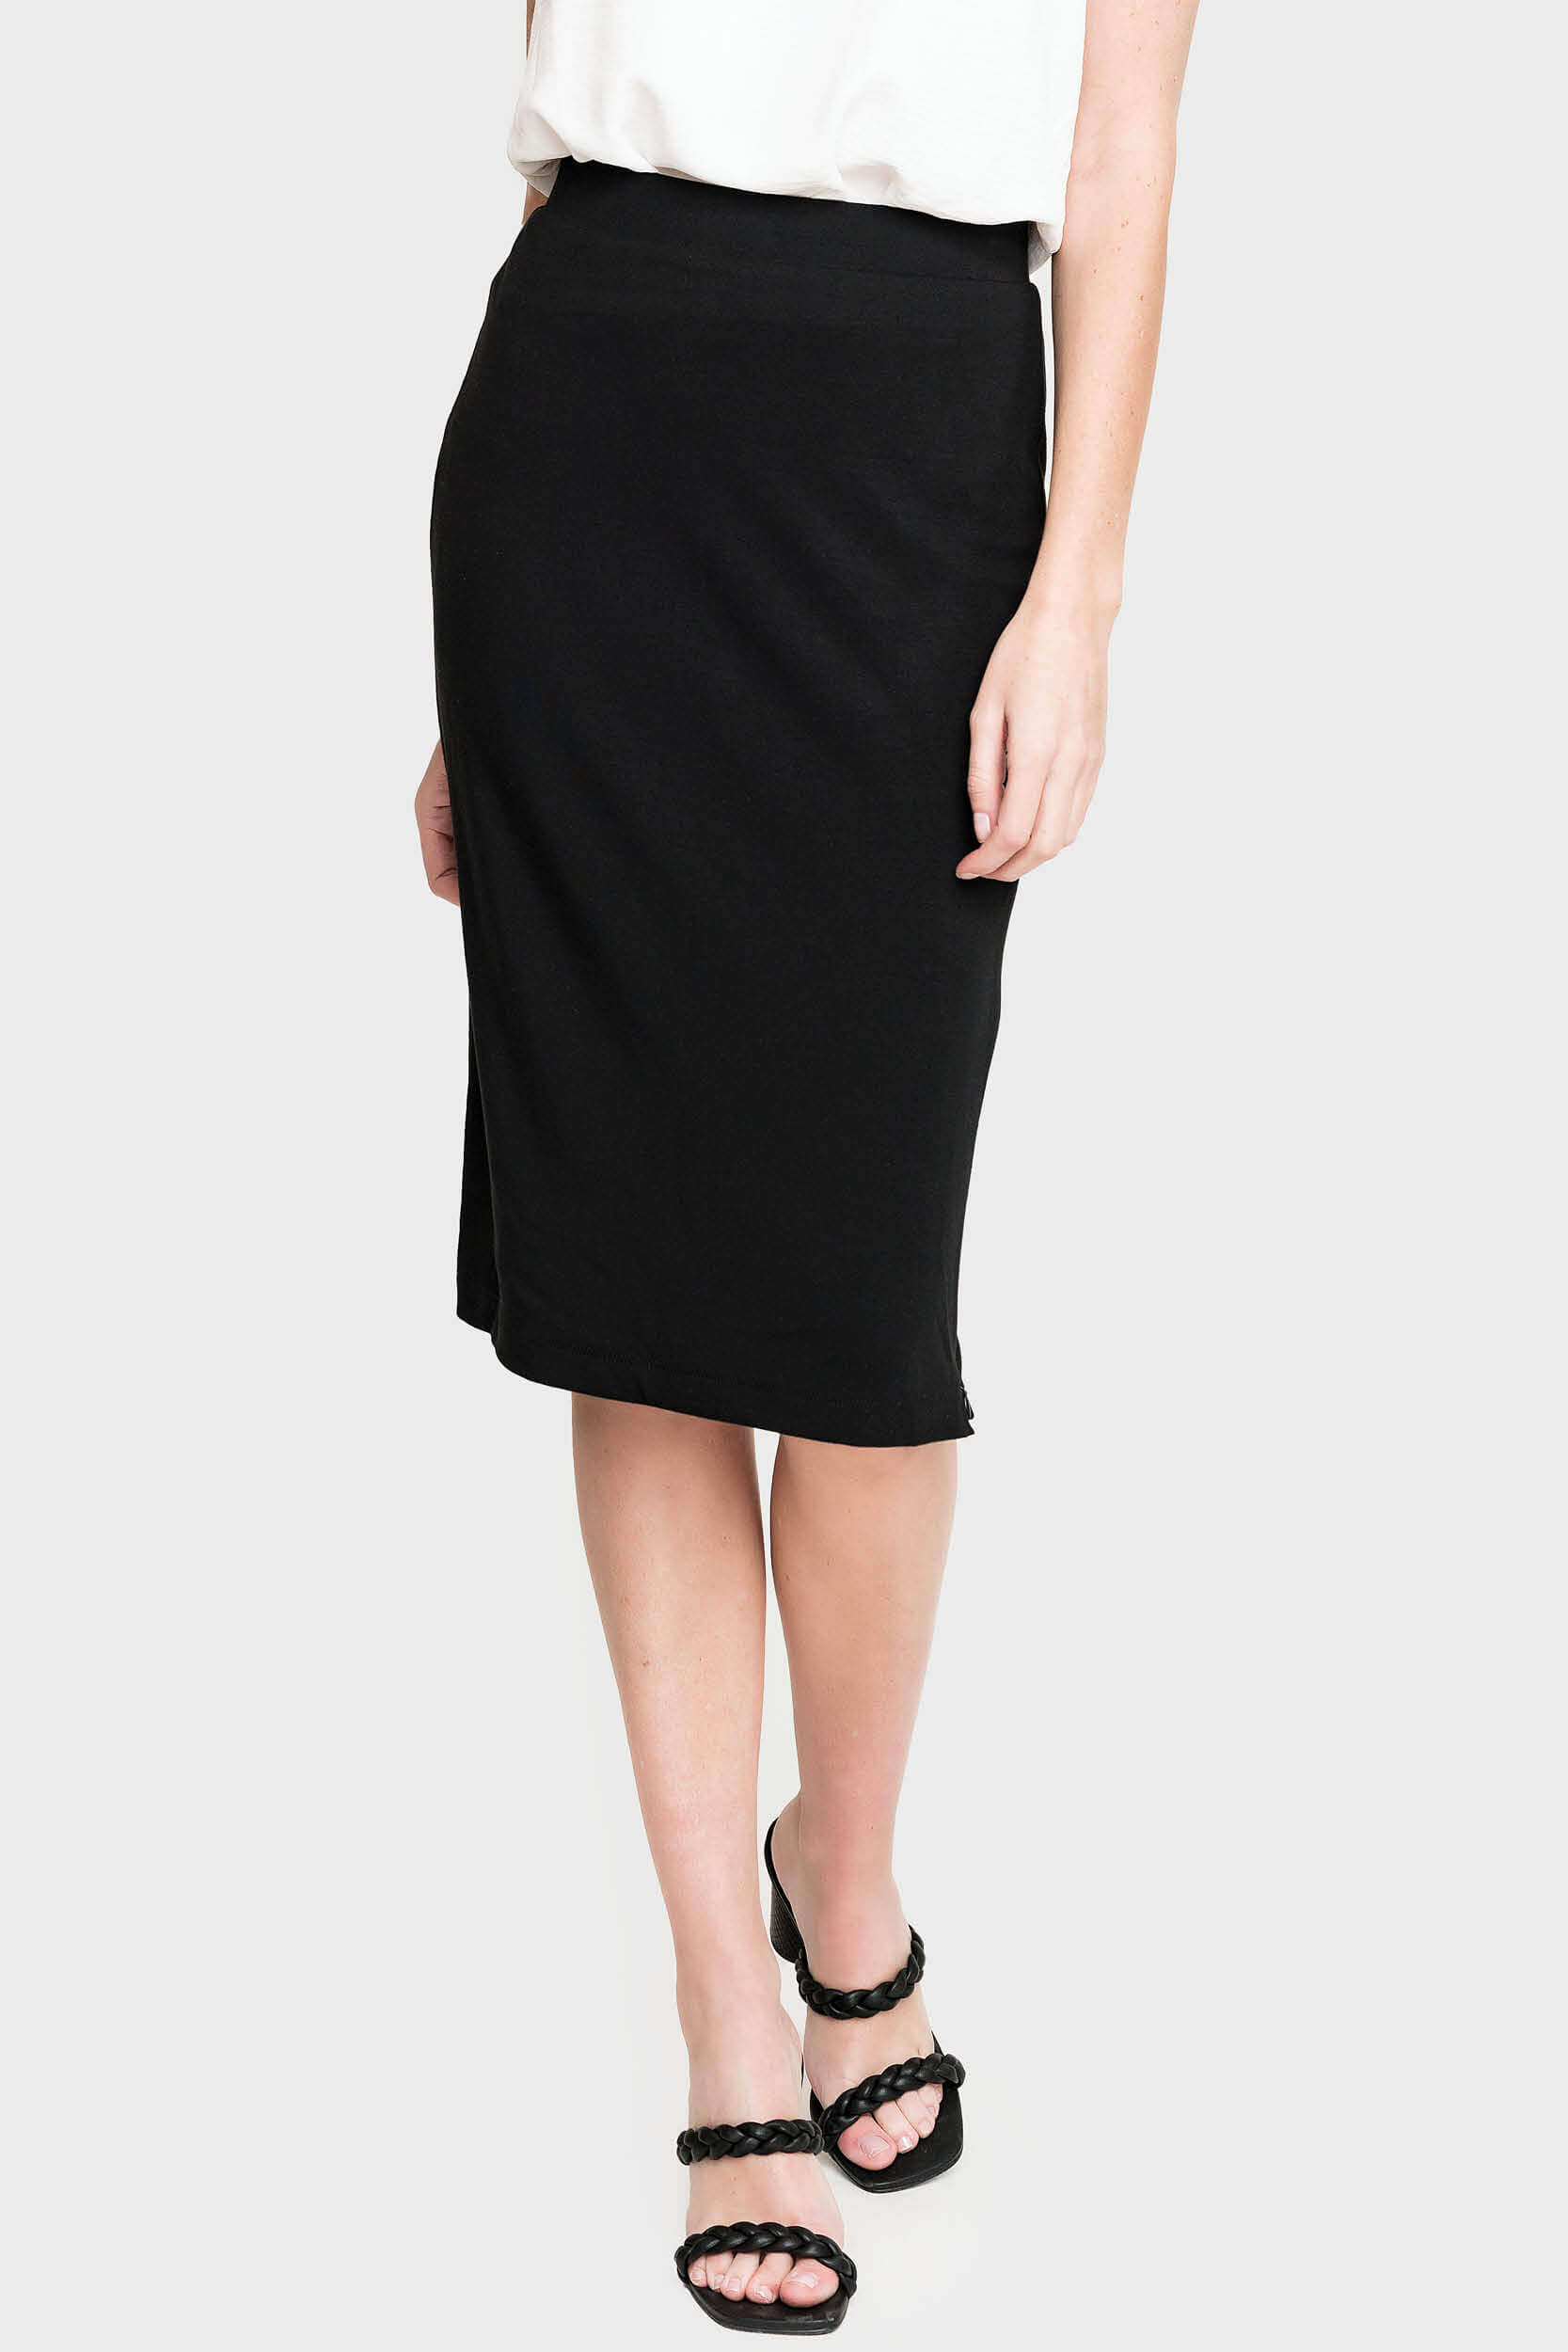 Essential Zippered Side Slit Ponte Skirt - Black XXS